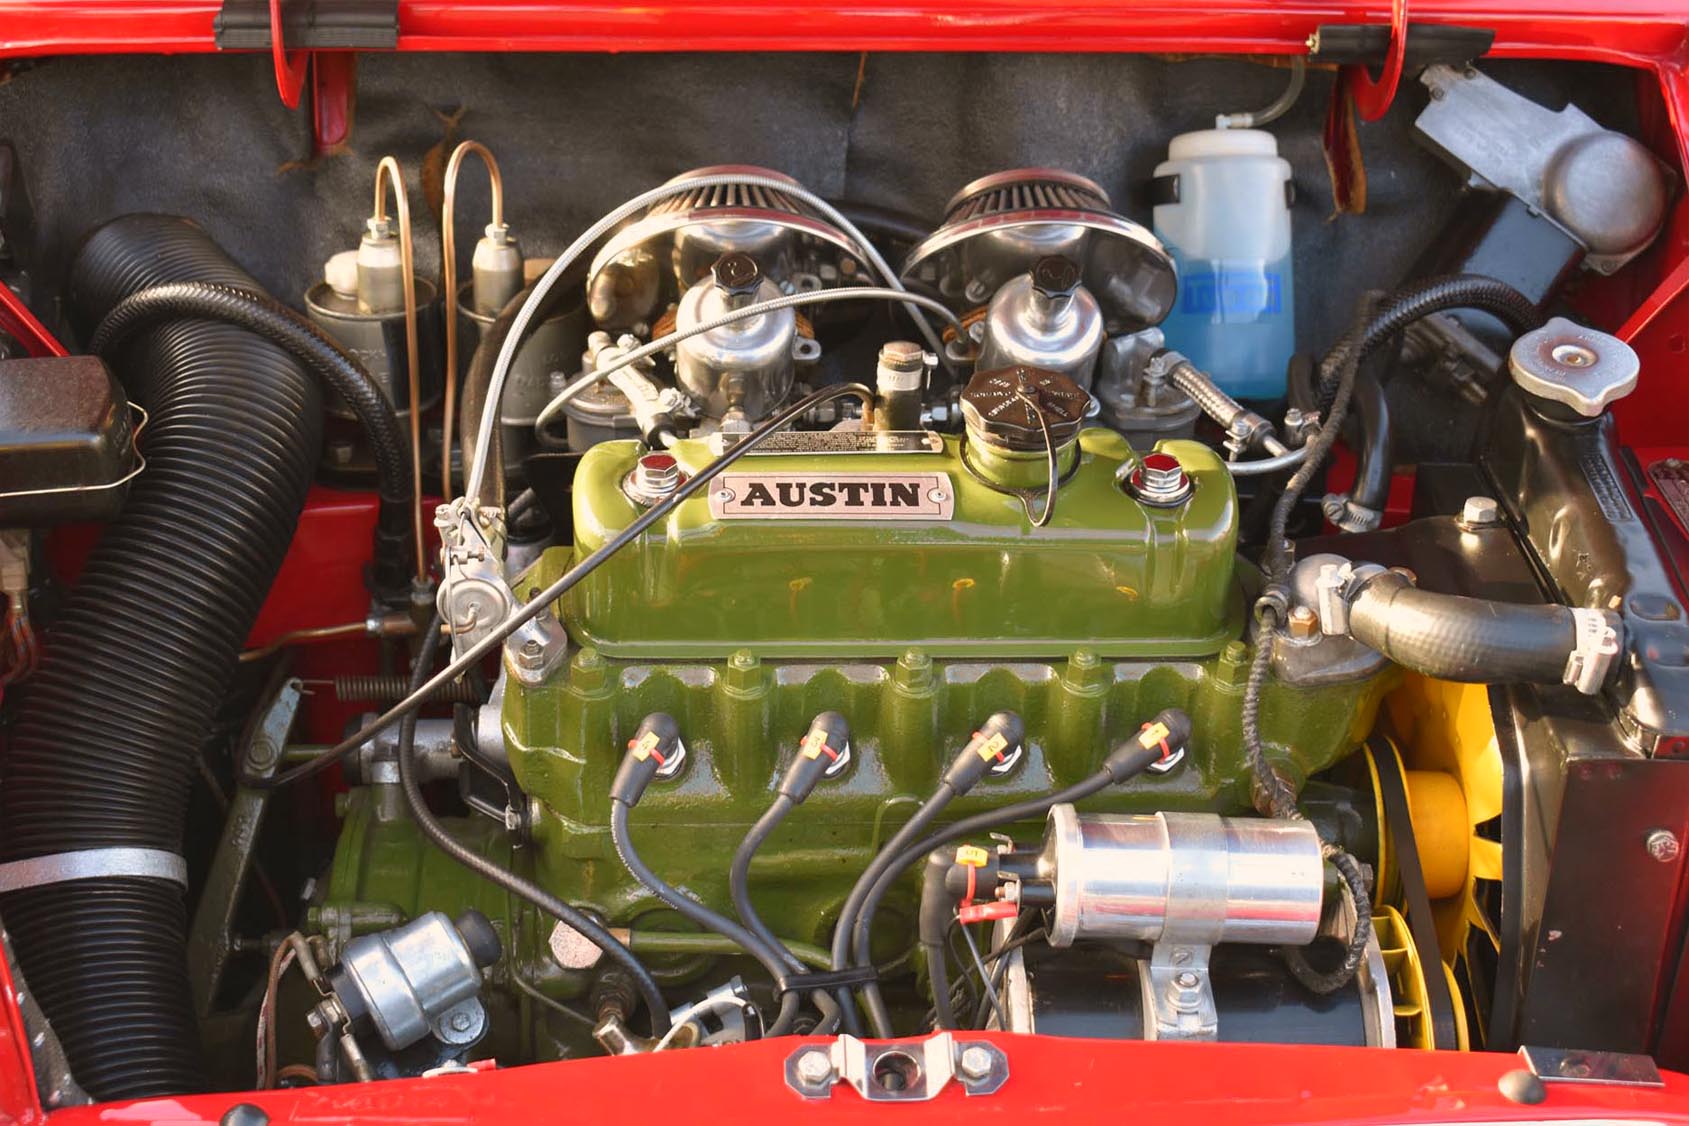 Austin engine.jpg